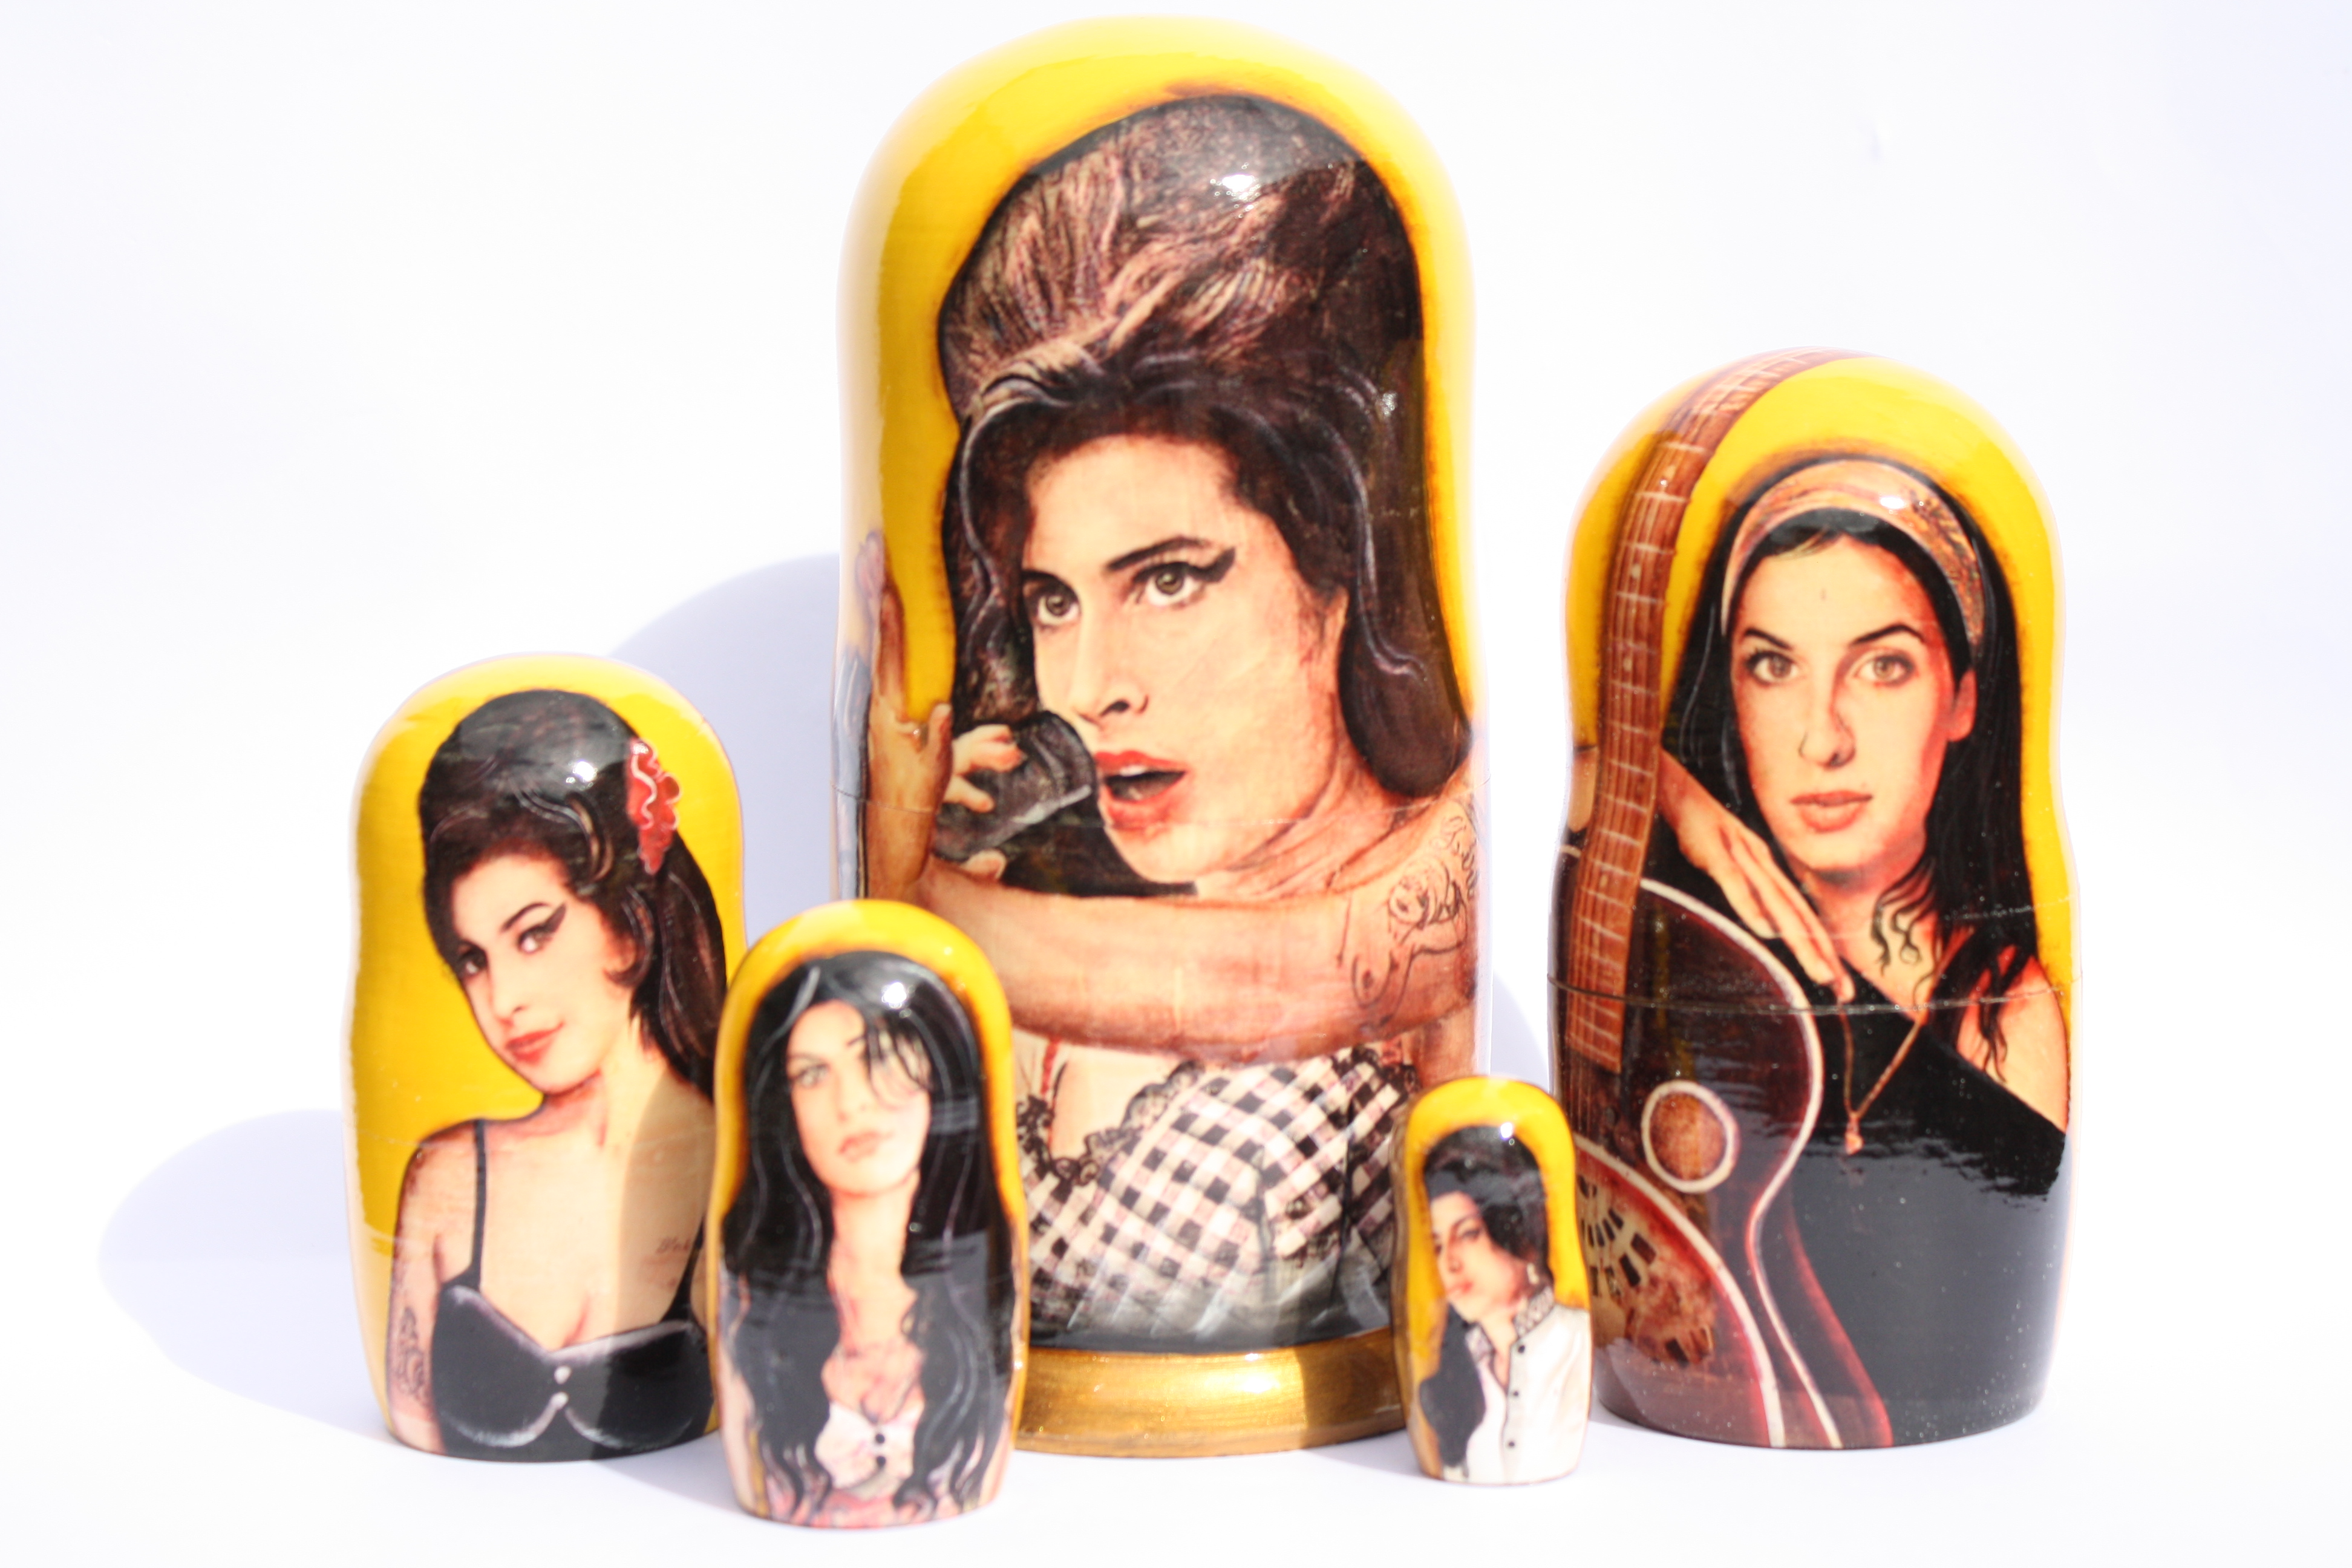 A 5 Nested set of celebrities, Amy Winehouse